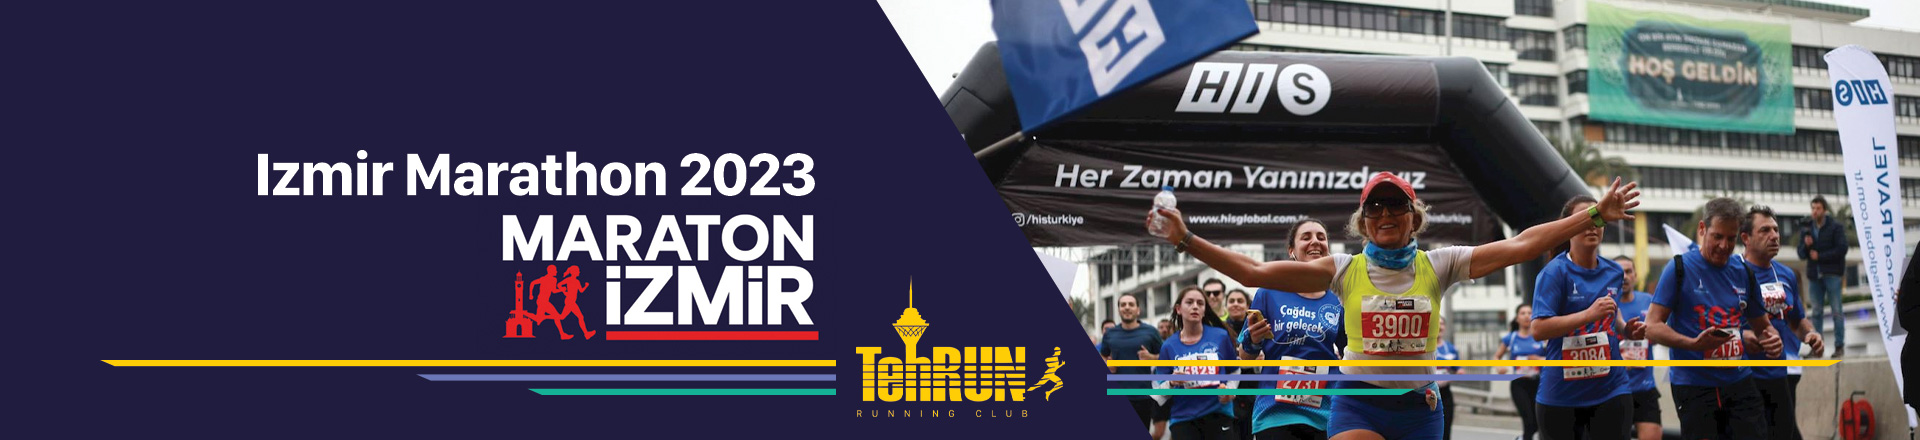 Izmir-Marathon-2023